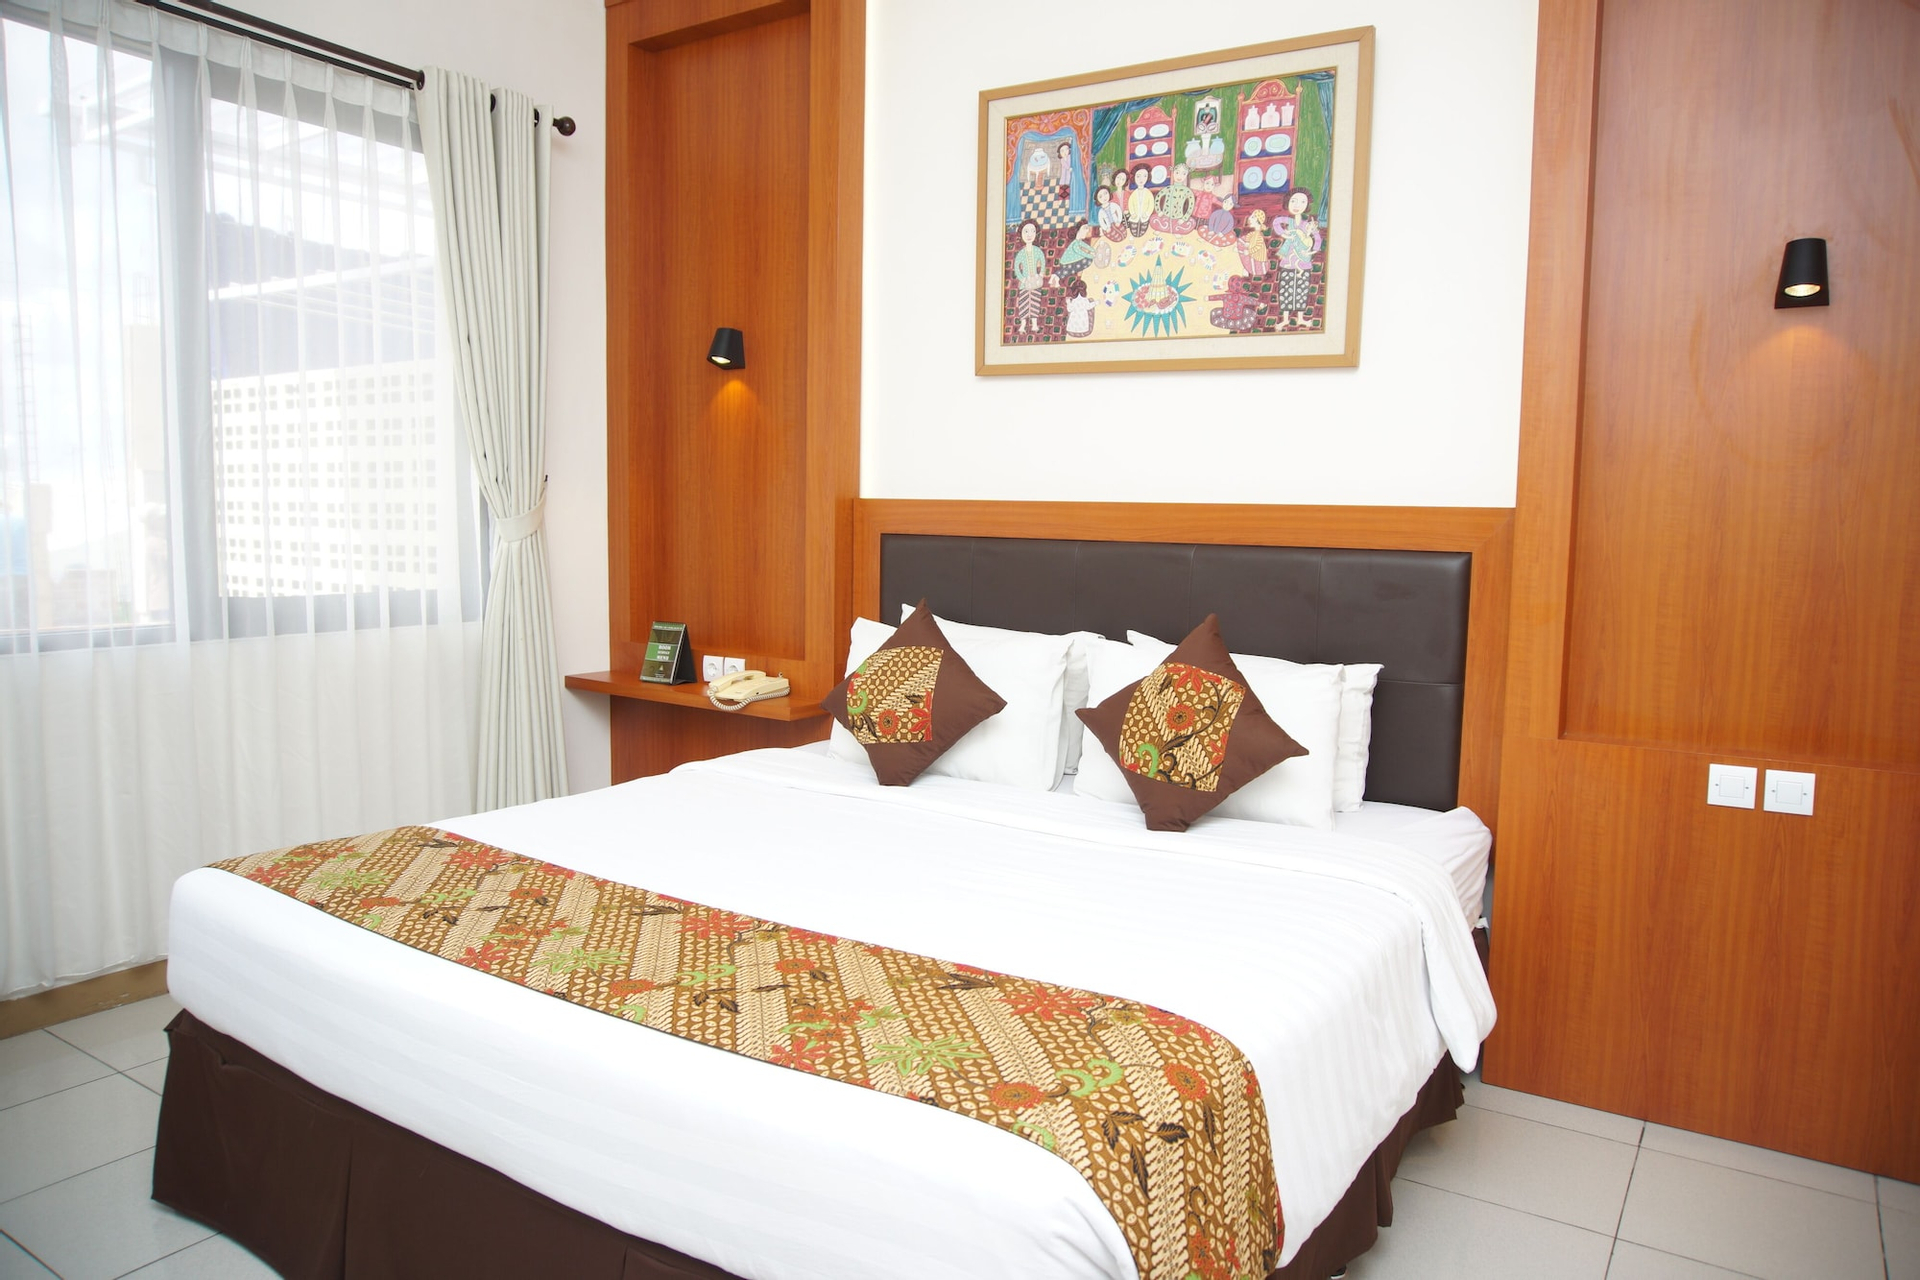 Bedroom 4, Griya Sentana Malioboro Hotel, Yogyakarta